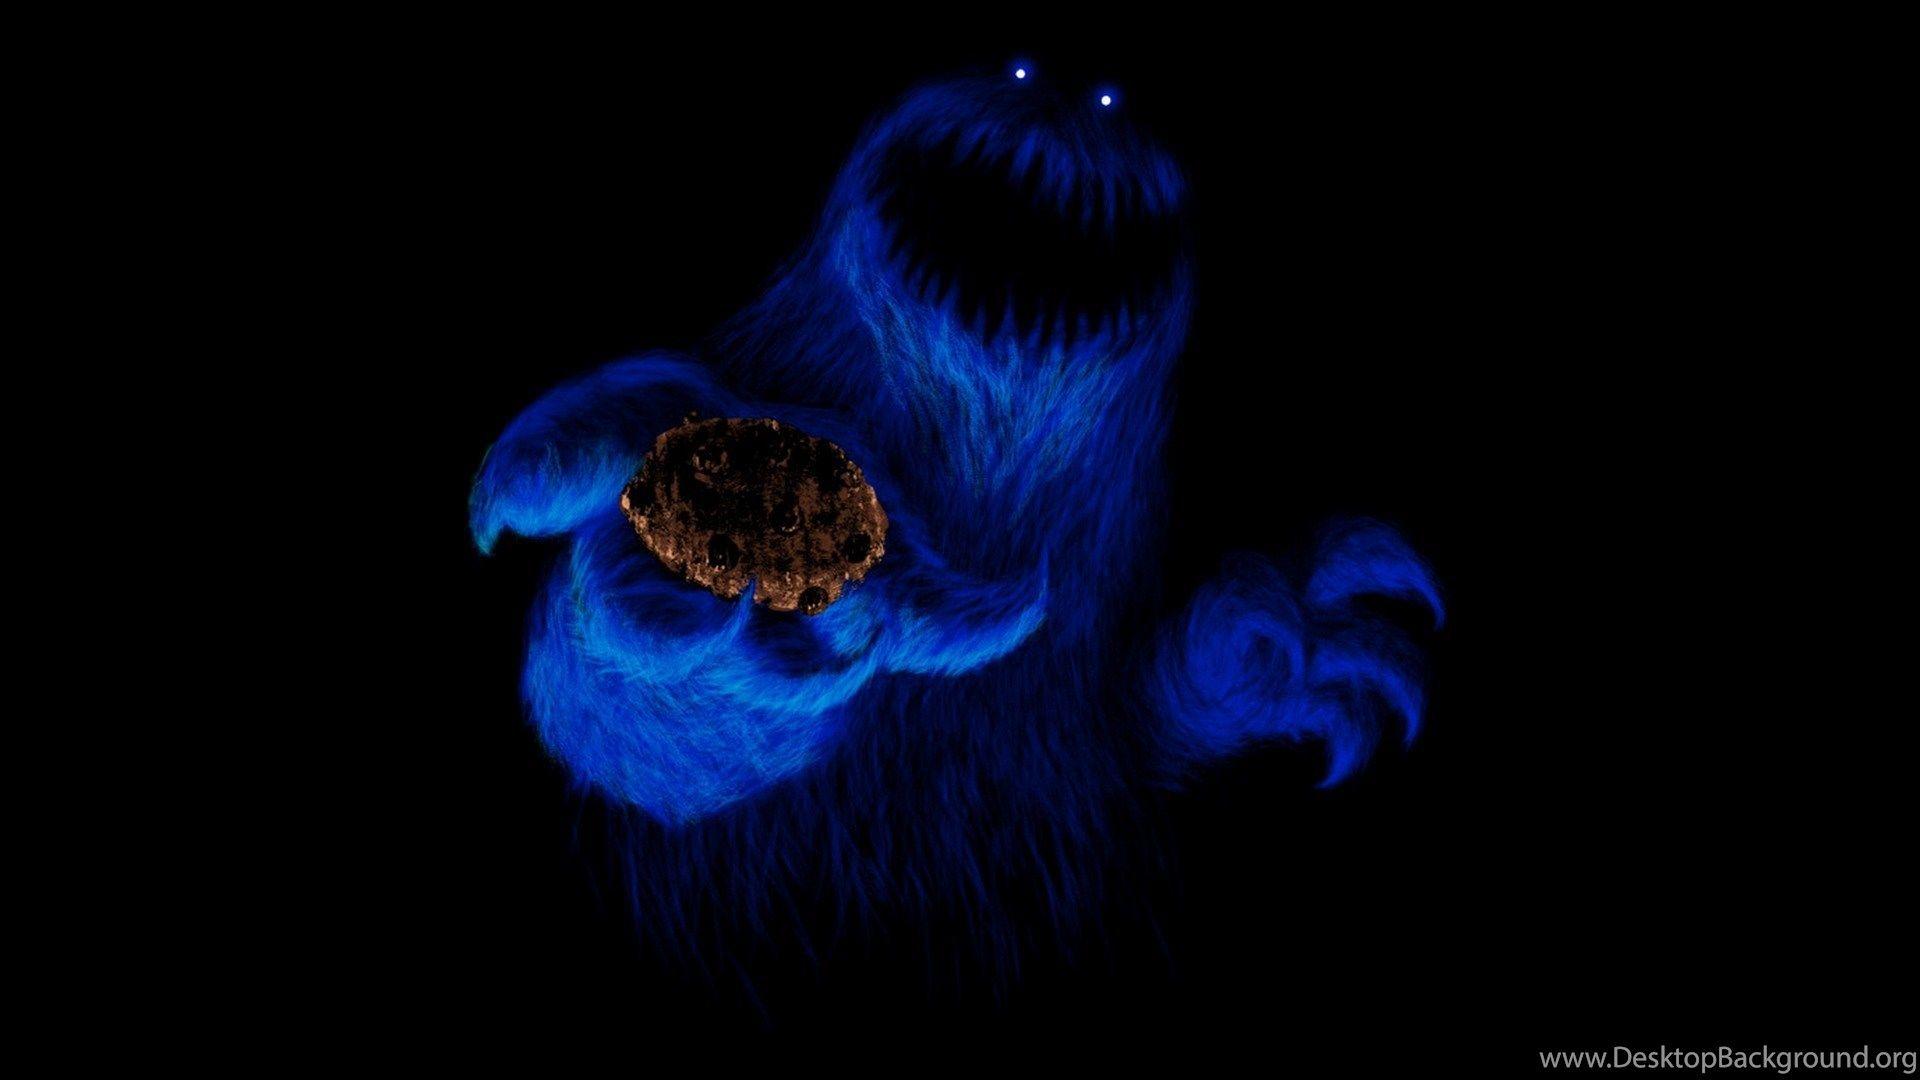 Cookie Monster Wallpaper Image Good Fullwidehd.com Desktop Background